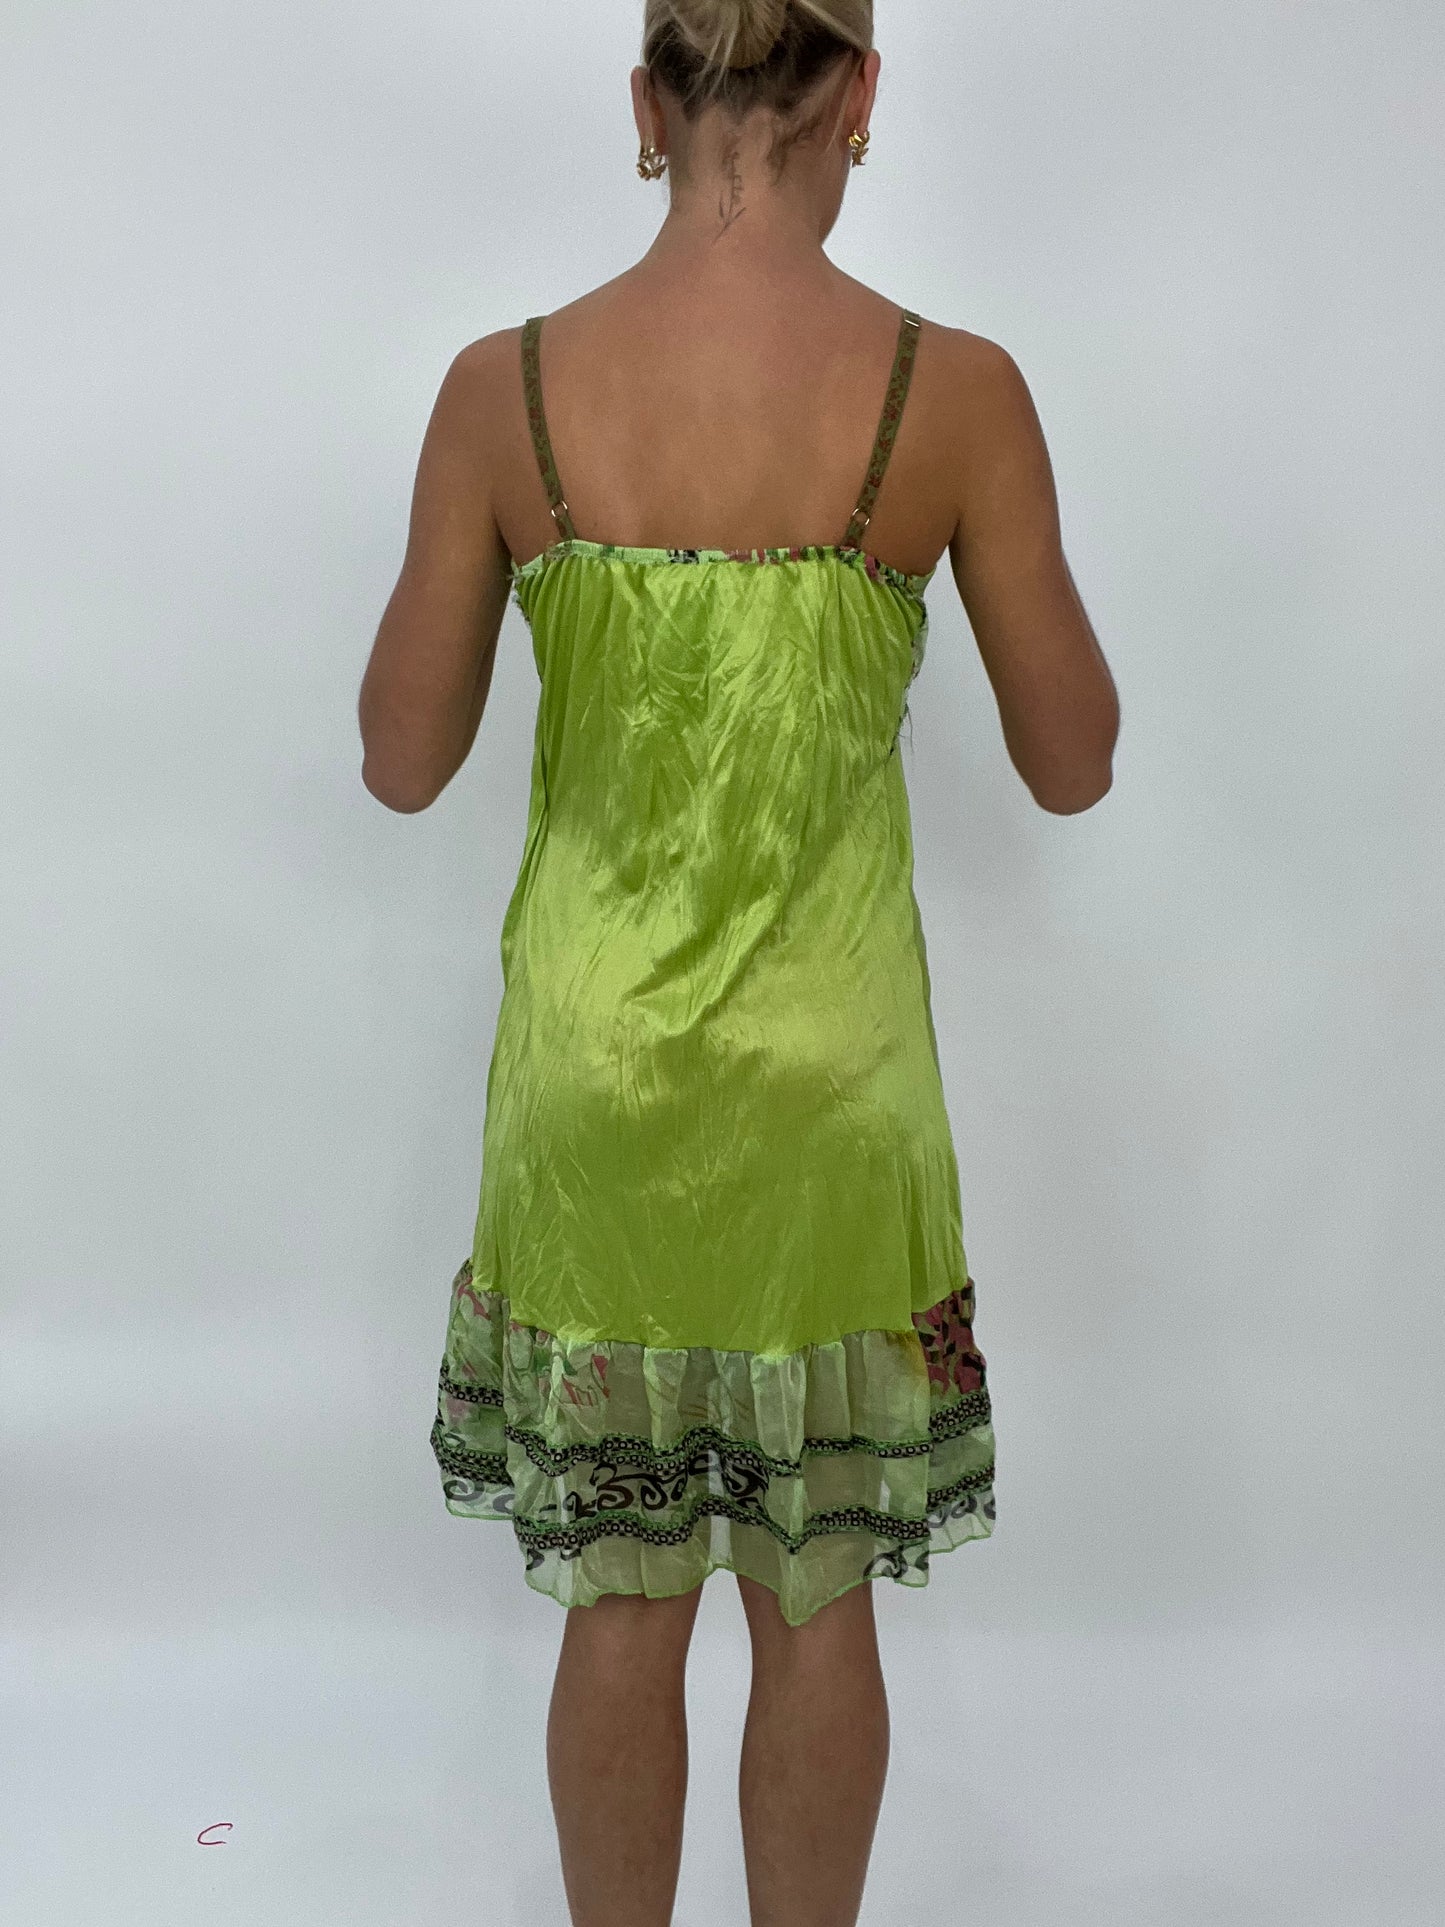 COCONUT GIRL DROP | medium green satin dress with mesh floral print